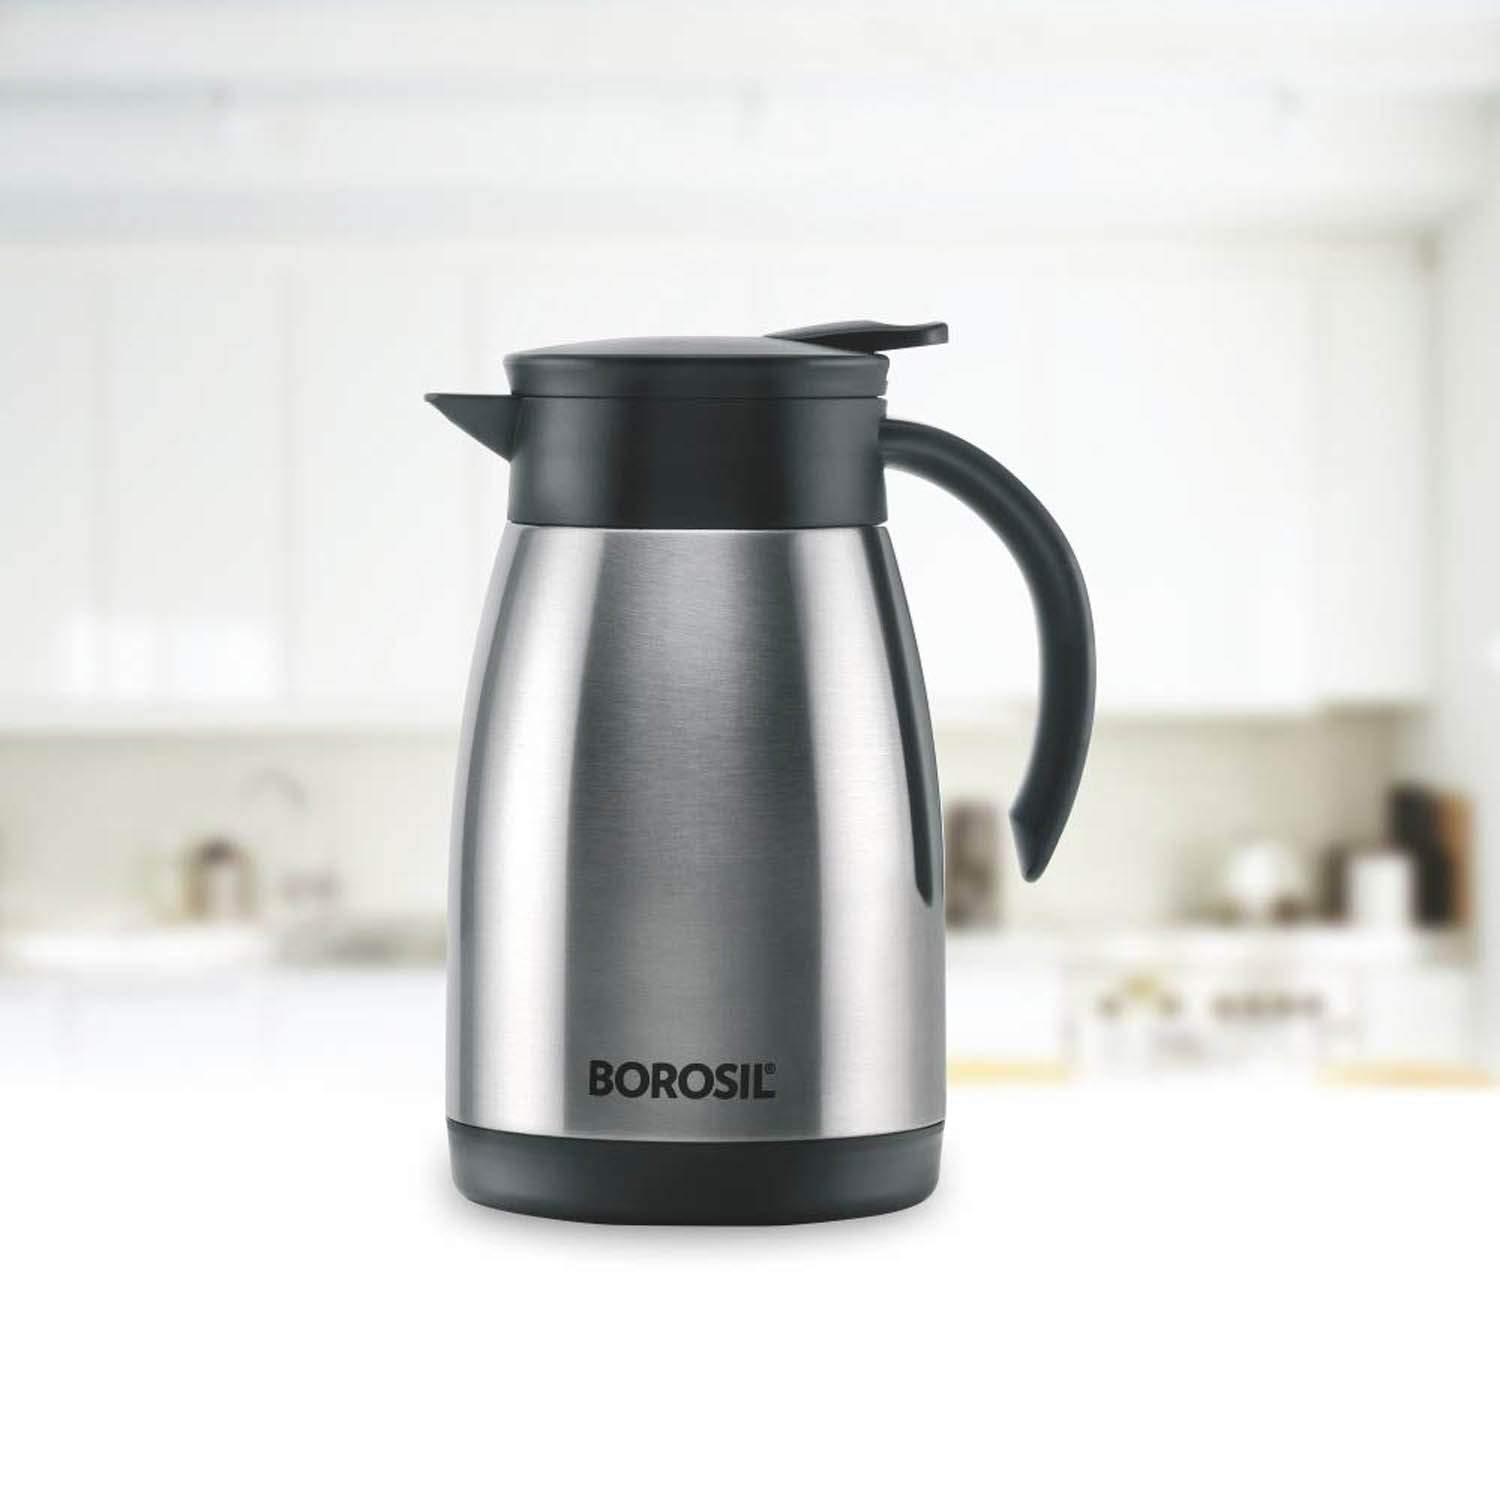 Borosil Vacuum Insulated Teapot Flask - Stainless Steel - 1.5 Litre - FLKT15SS21